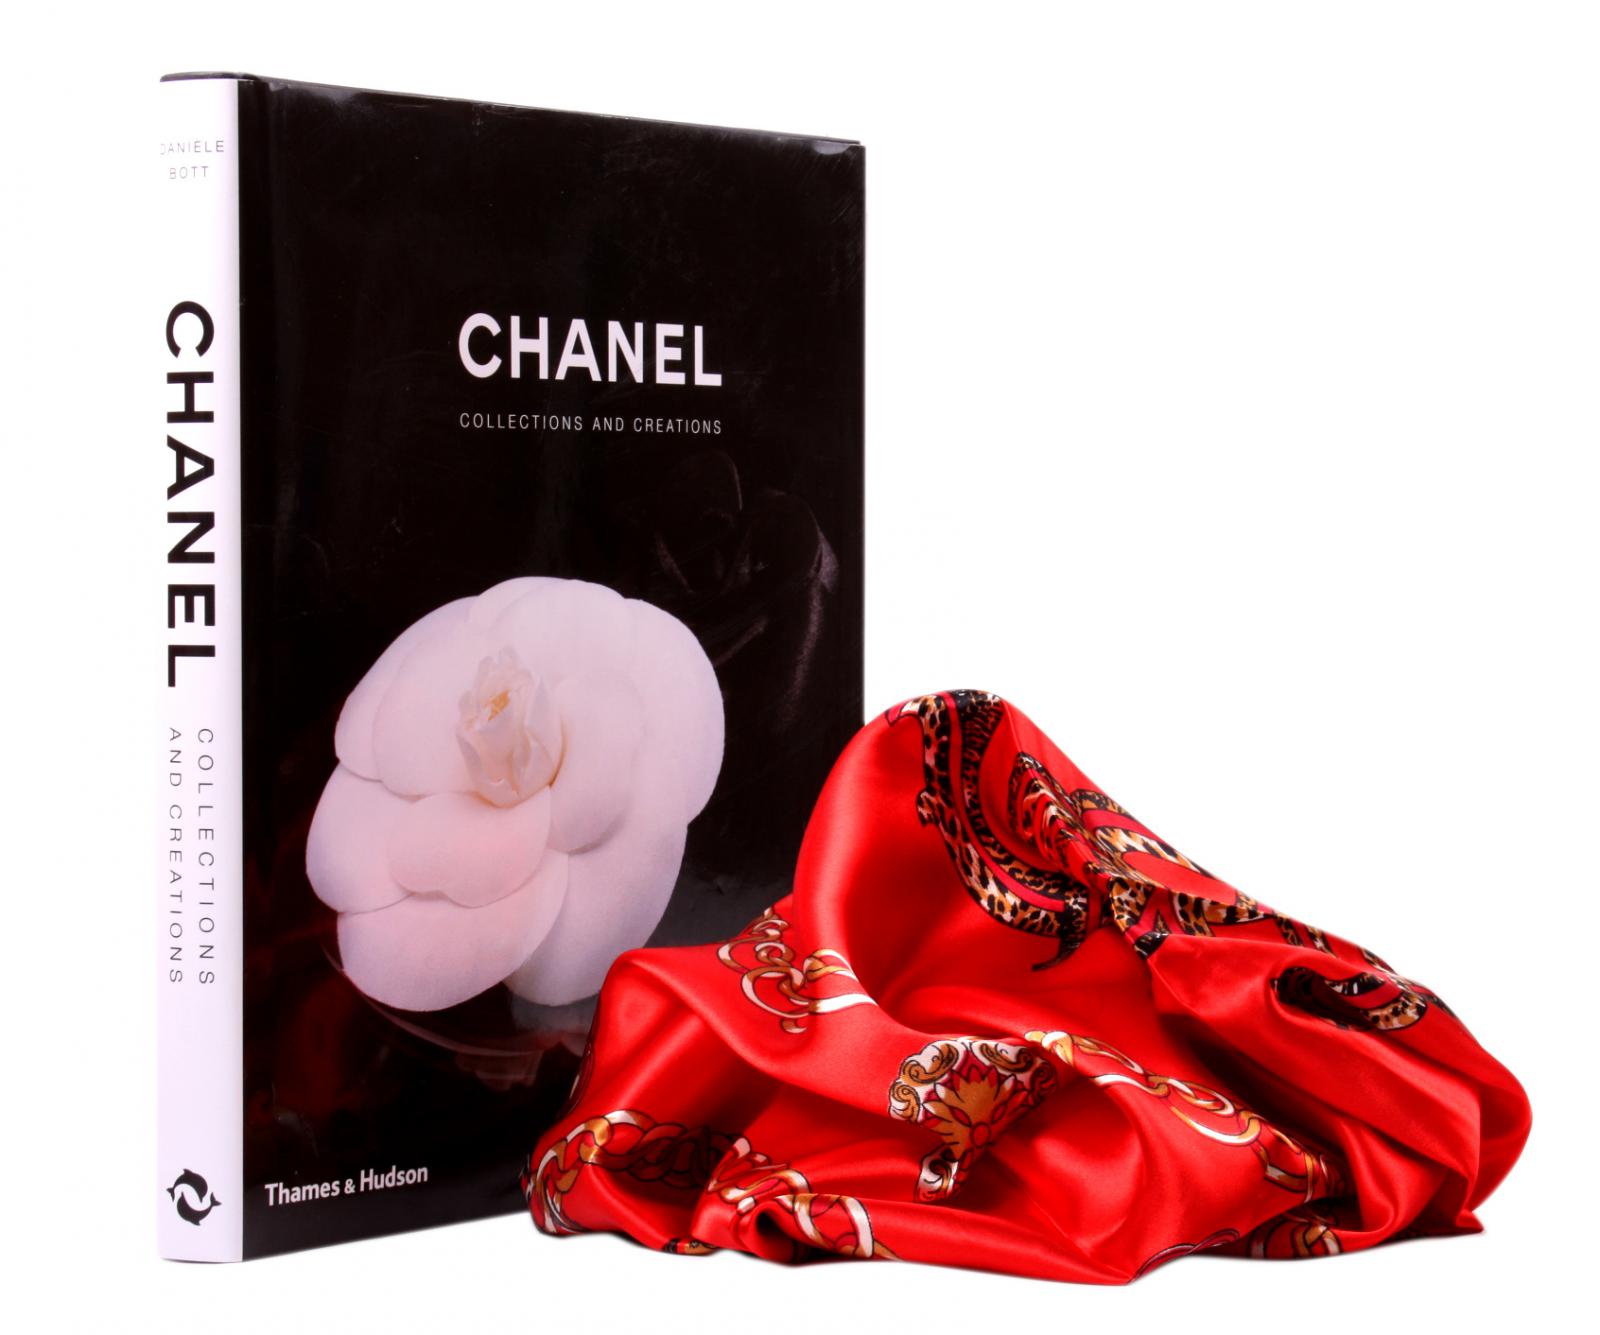 Cadou Chanel Collections and Creations de Daniele Bott & Esarfa